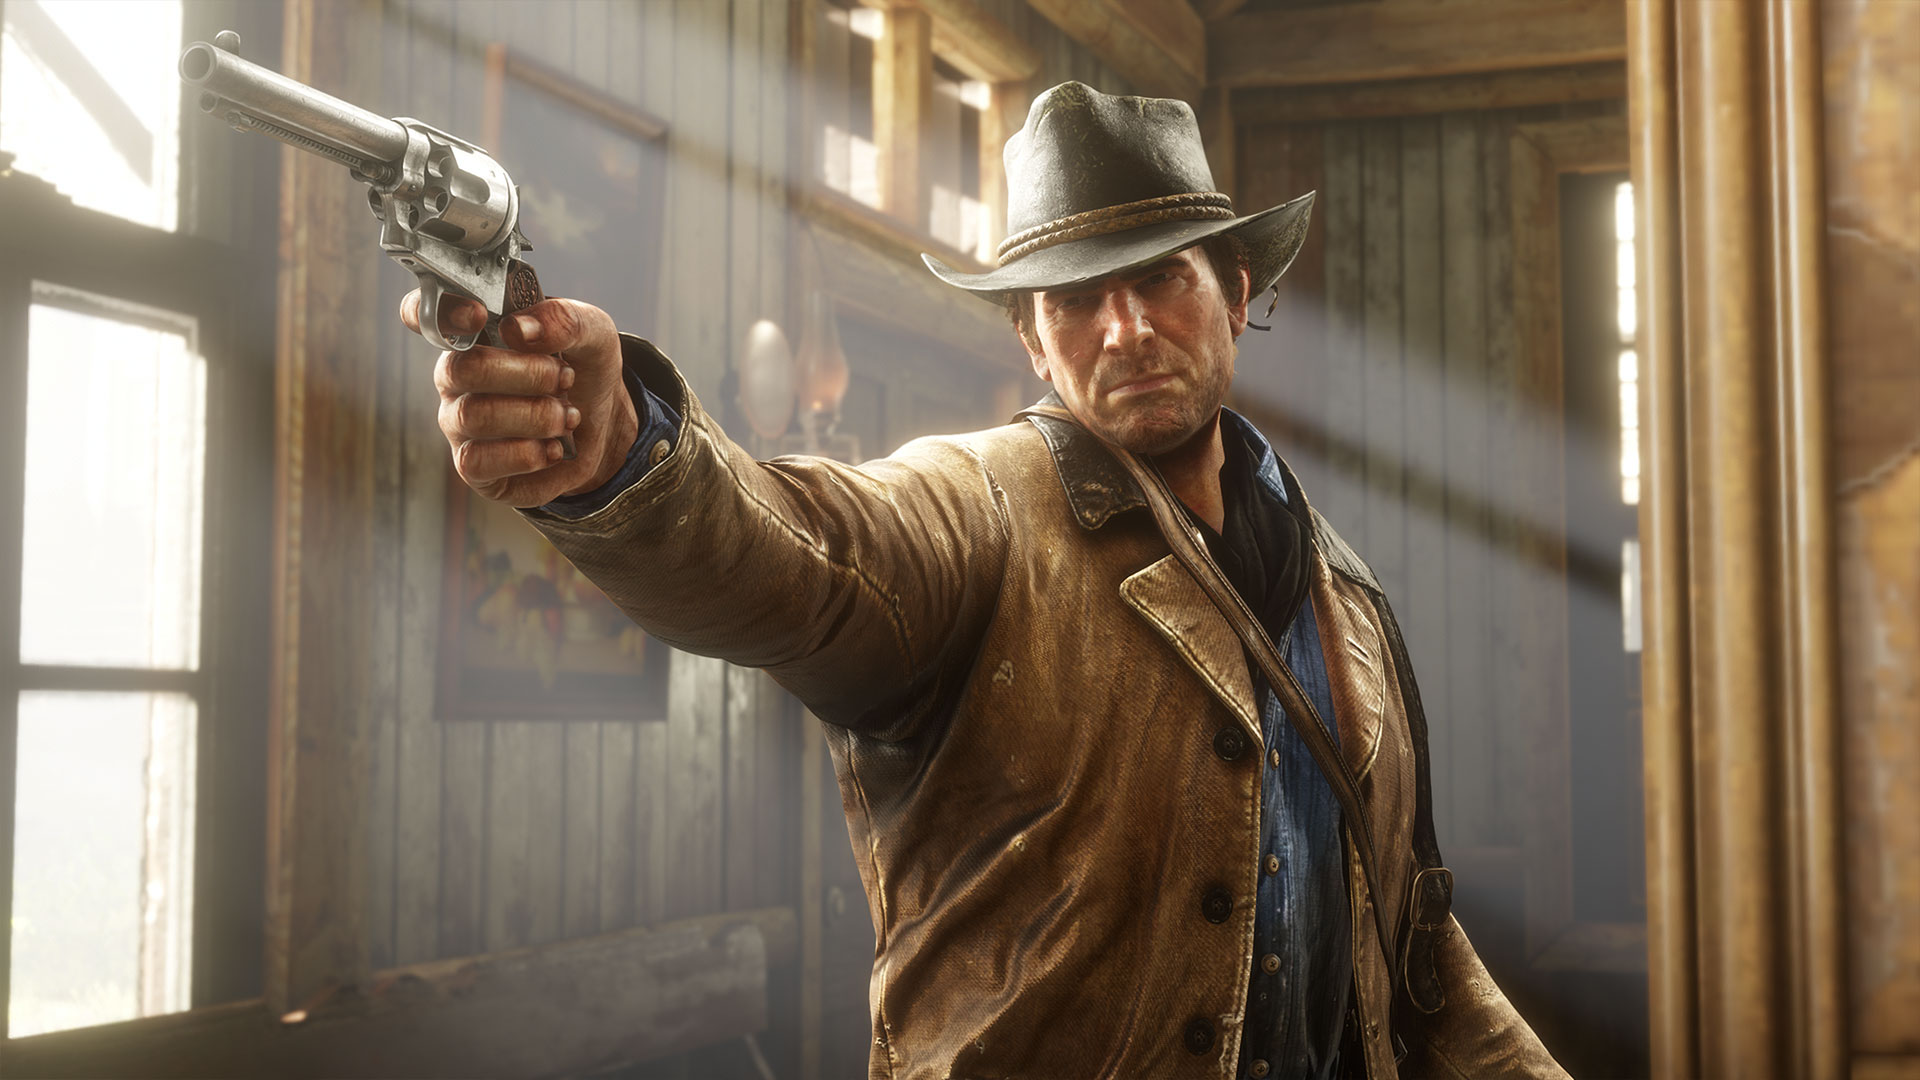 As GTA 6 trailer reveal approaches, Rockstar Games whacks the name